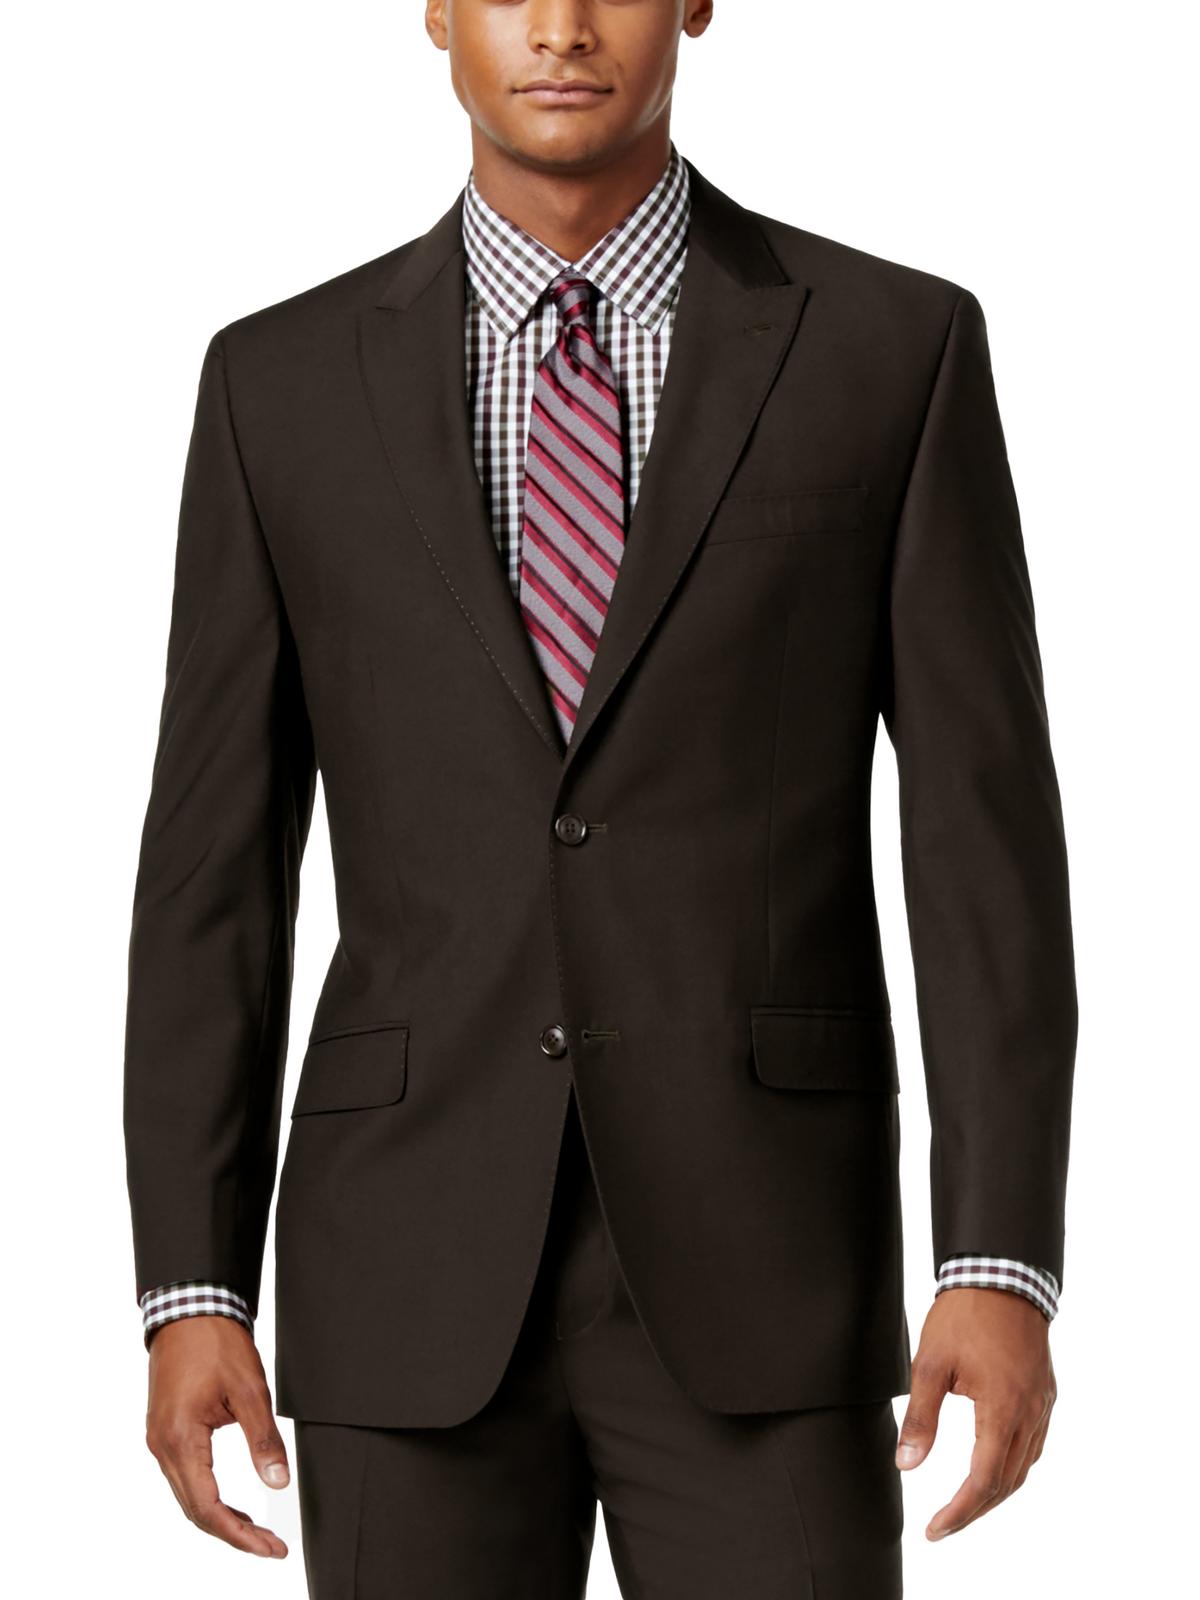 Sean John Msalisbury Mens Classic Fit Suit Separate Two-Button Blazer (Khaki) $47.60 + Free Shipping